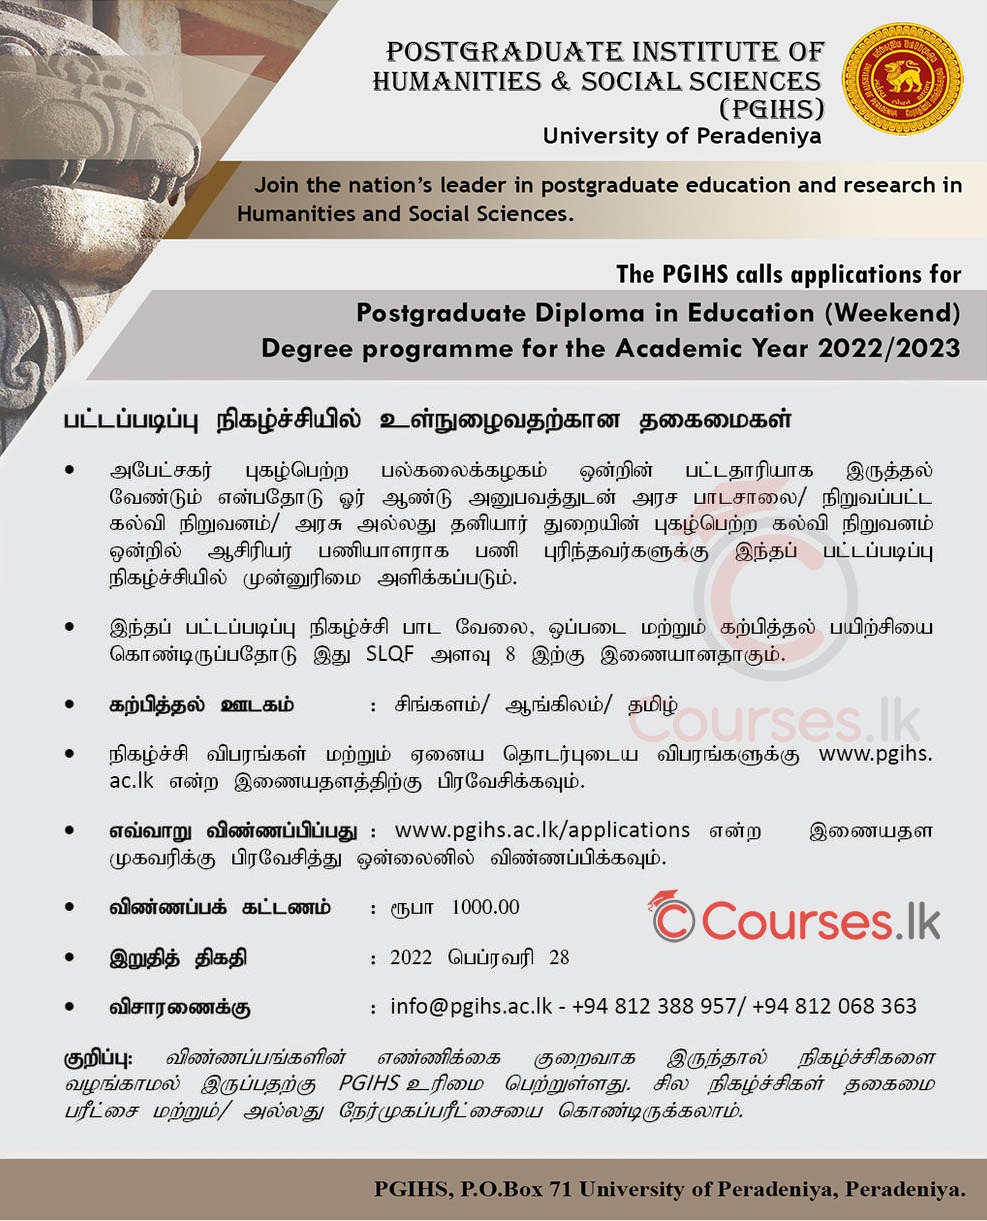 Postgraduate Diploma in Education (PGDE) Programme 2022/23 - University of Peradeniya